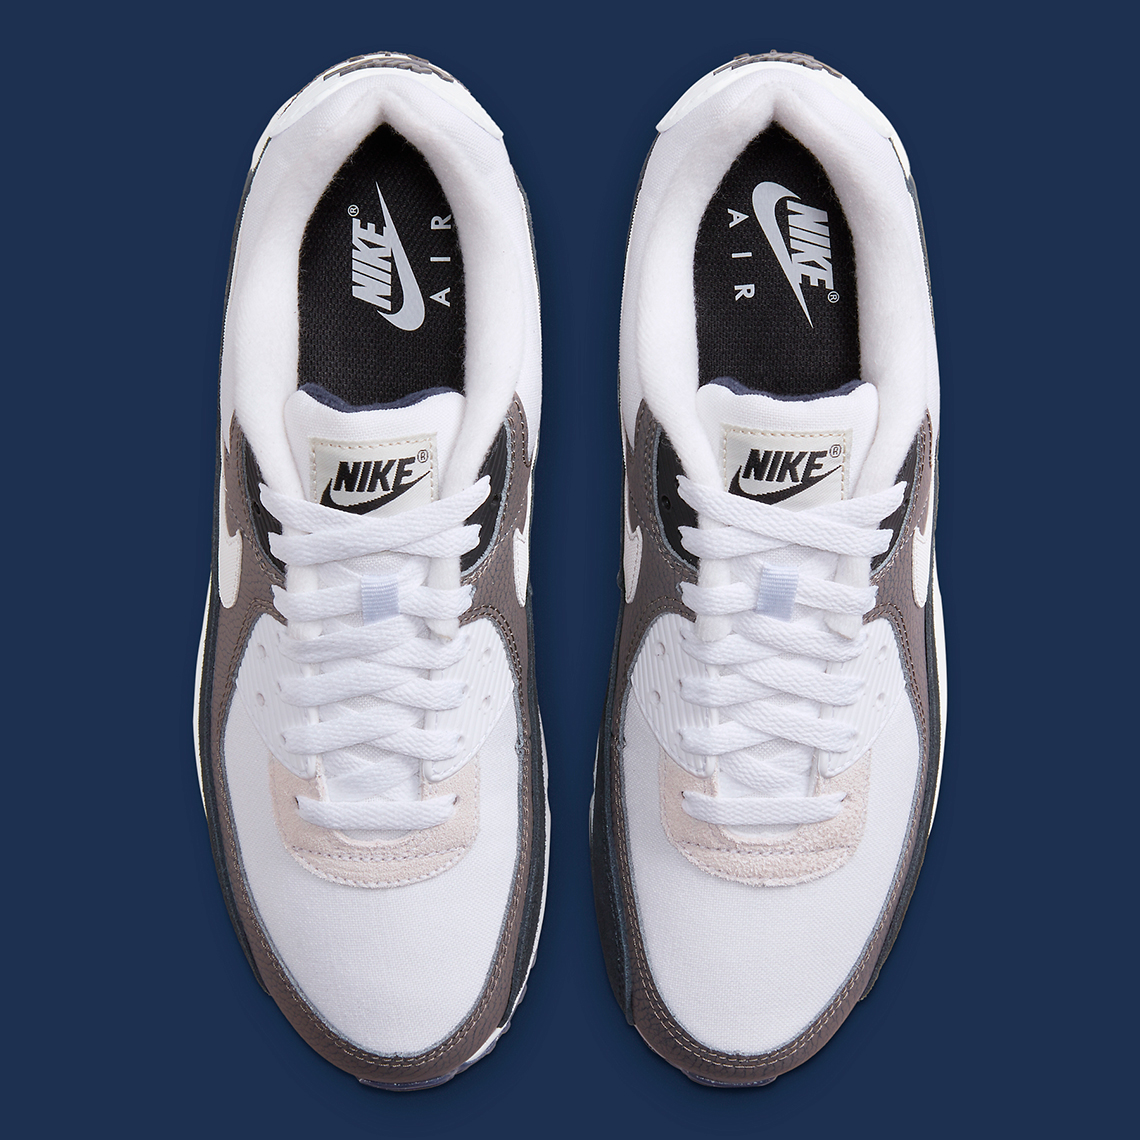 Nike boys nike shox white gray pink running shoes Flat Pewter Midnight Navy Dz3522 002 9